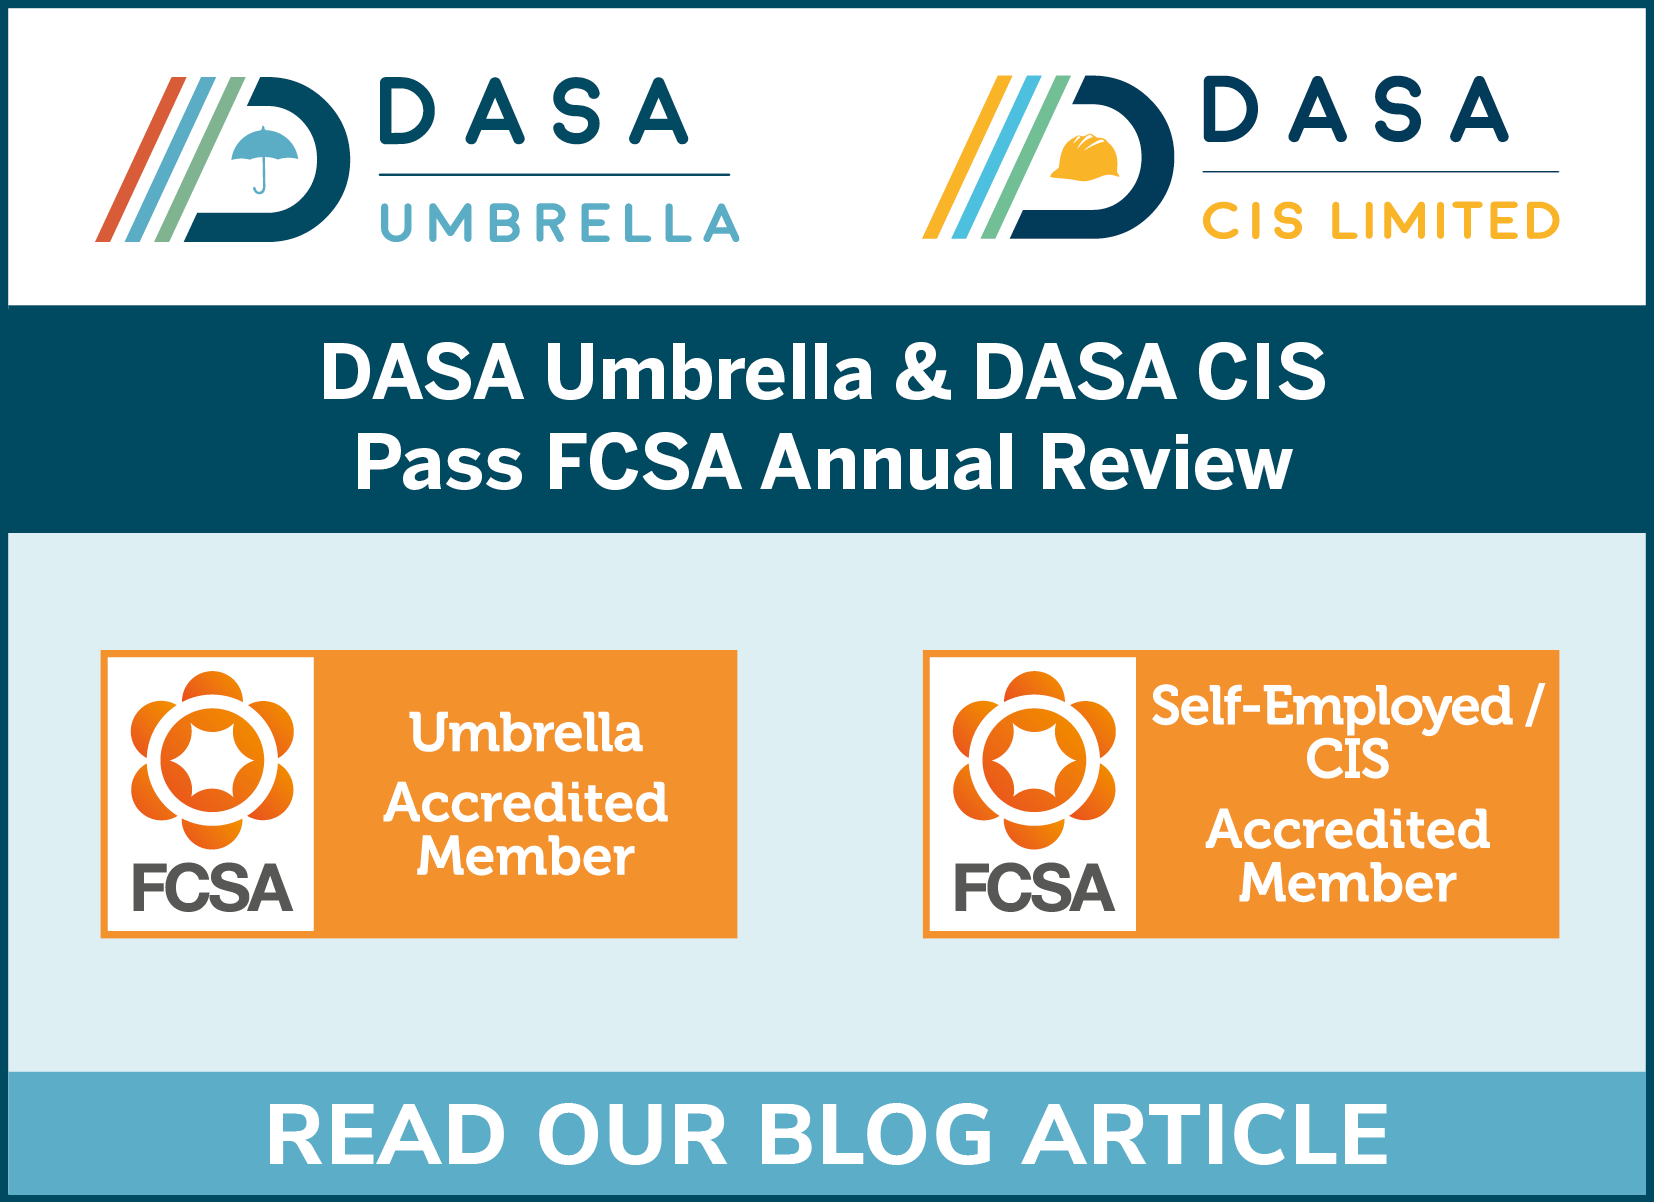 DASA UMBRELLA & CIS PASS FCSA ANNUAL REVIEW